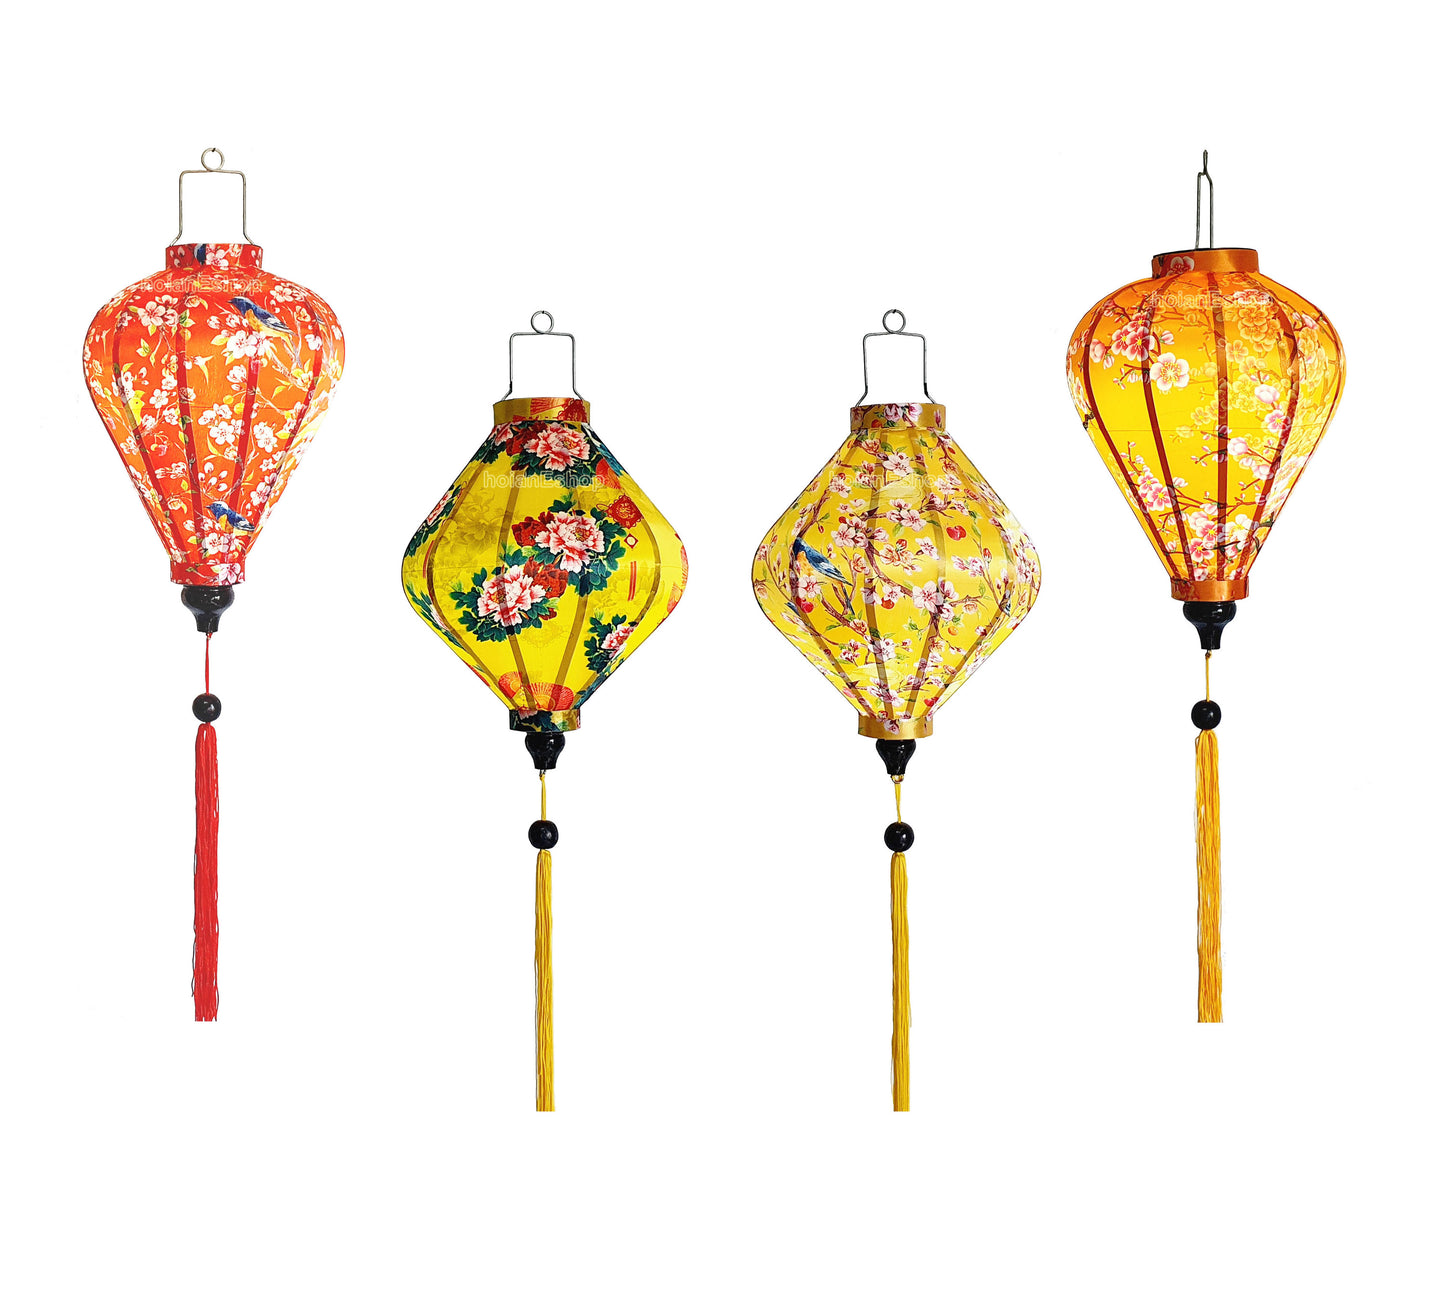 Vietnamese Hoi An Silk Lanterns for traditional TET decorations - Lunar New Year Decor - Wedding party decor - SET 4 PCS